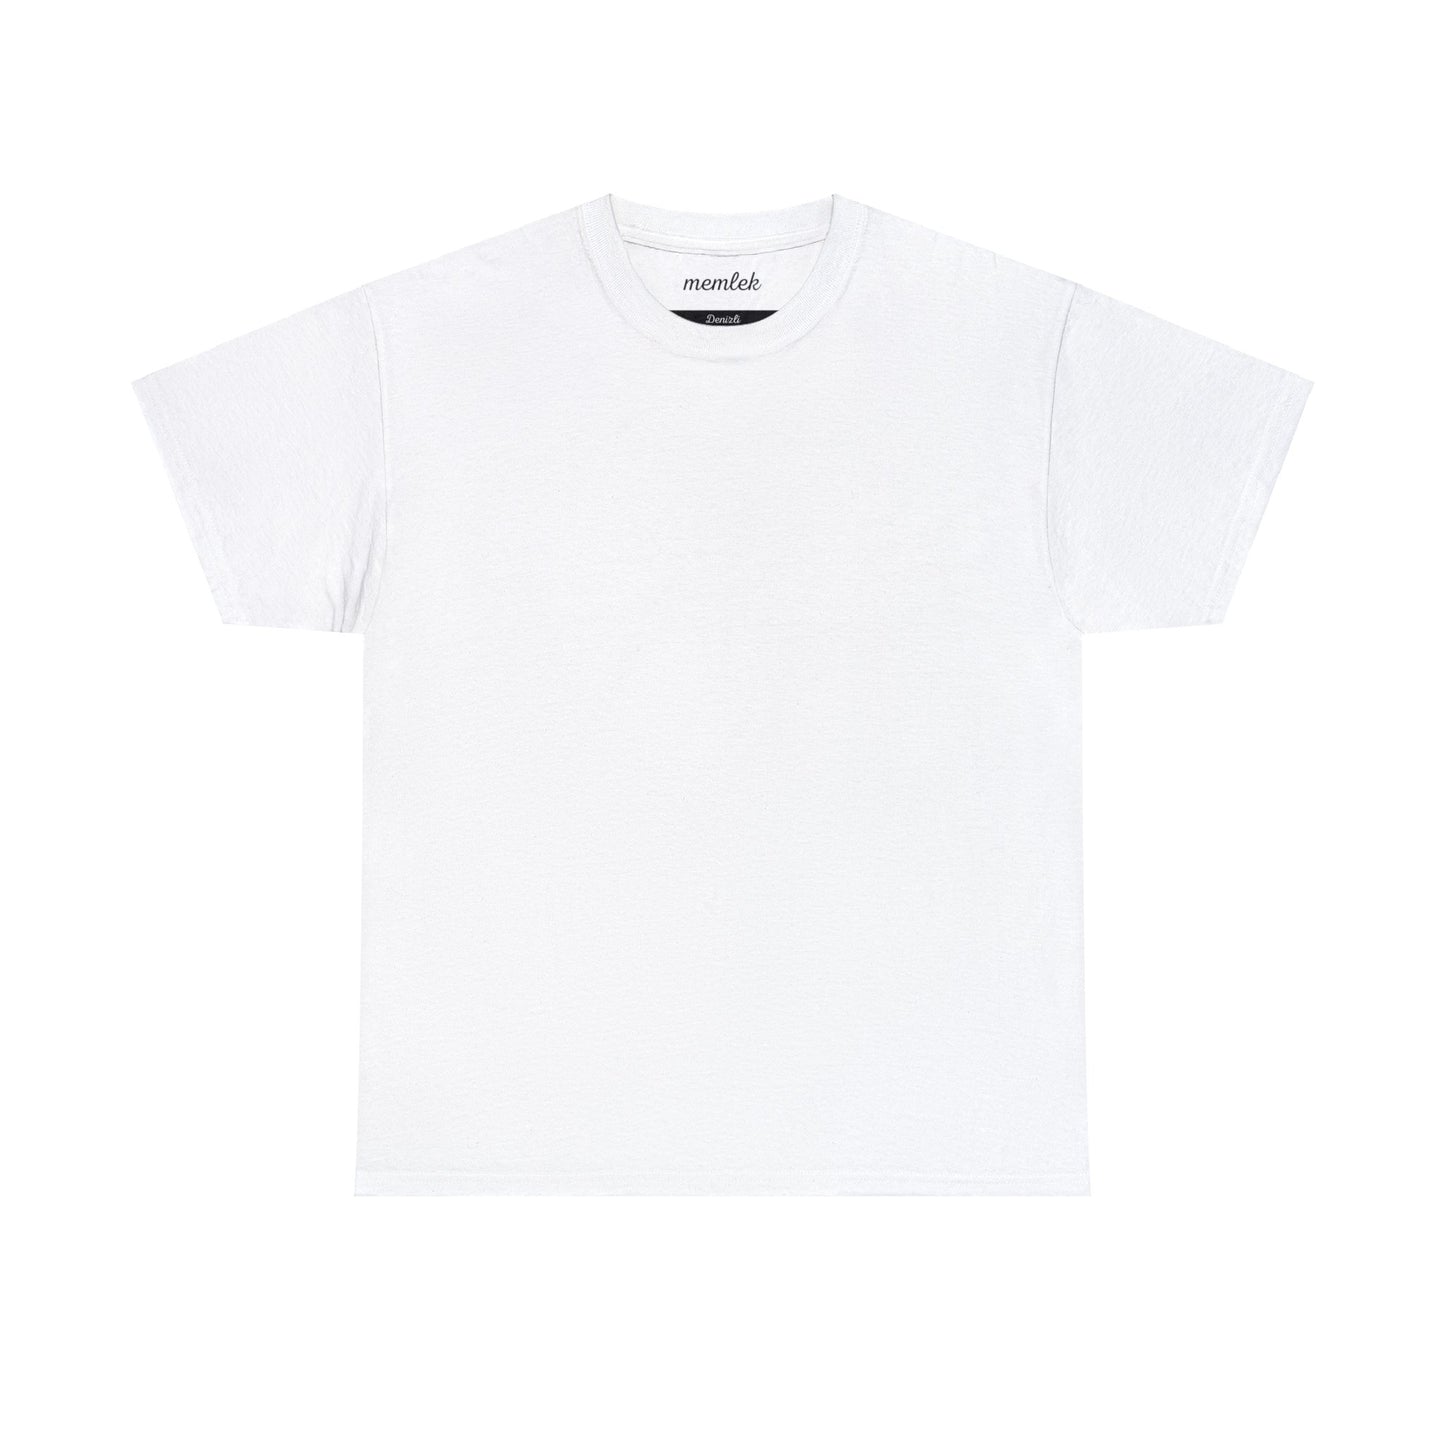 Kurt - 20 Denizli - T-Shirt - Back Print - Black/White